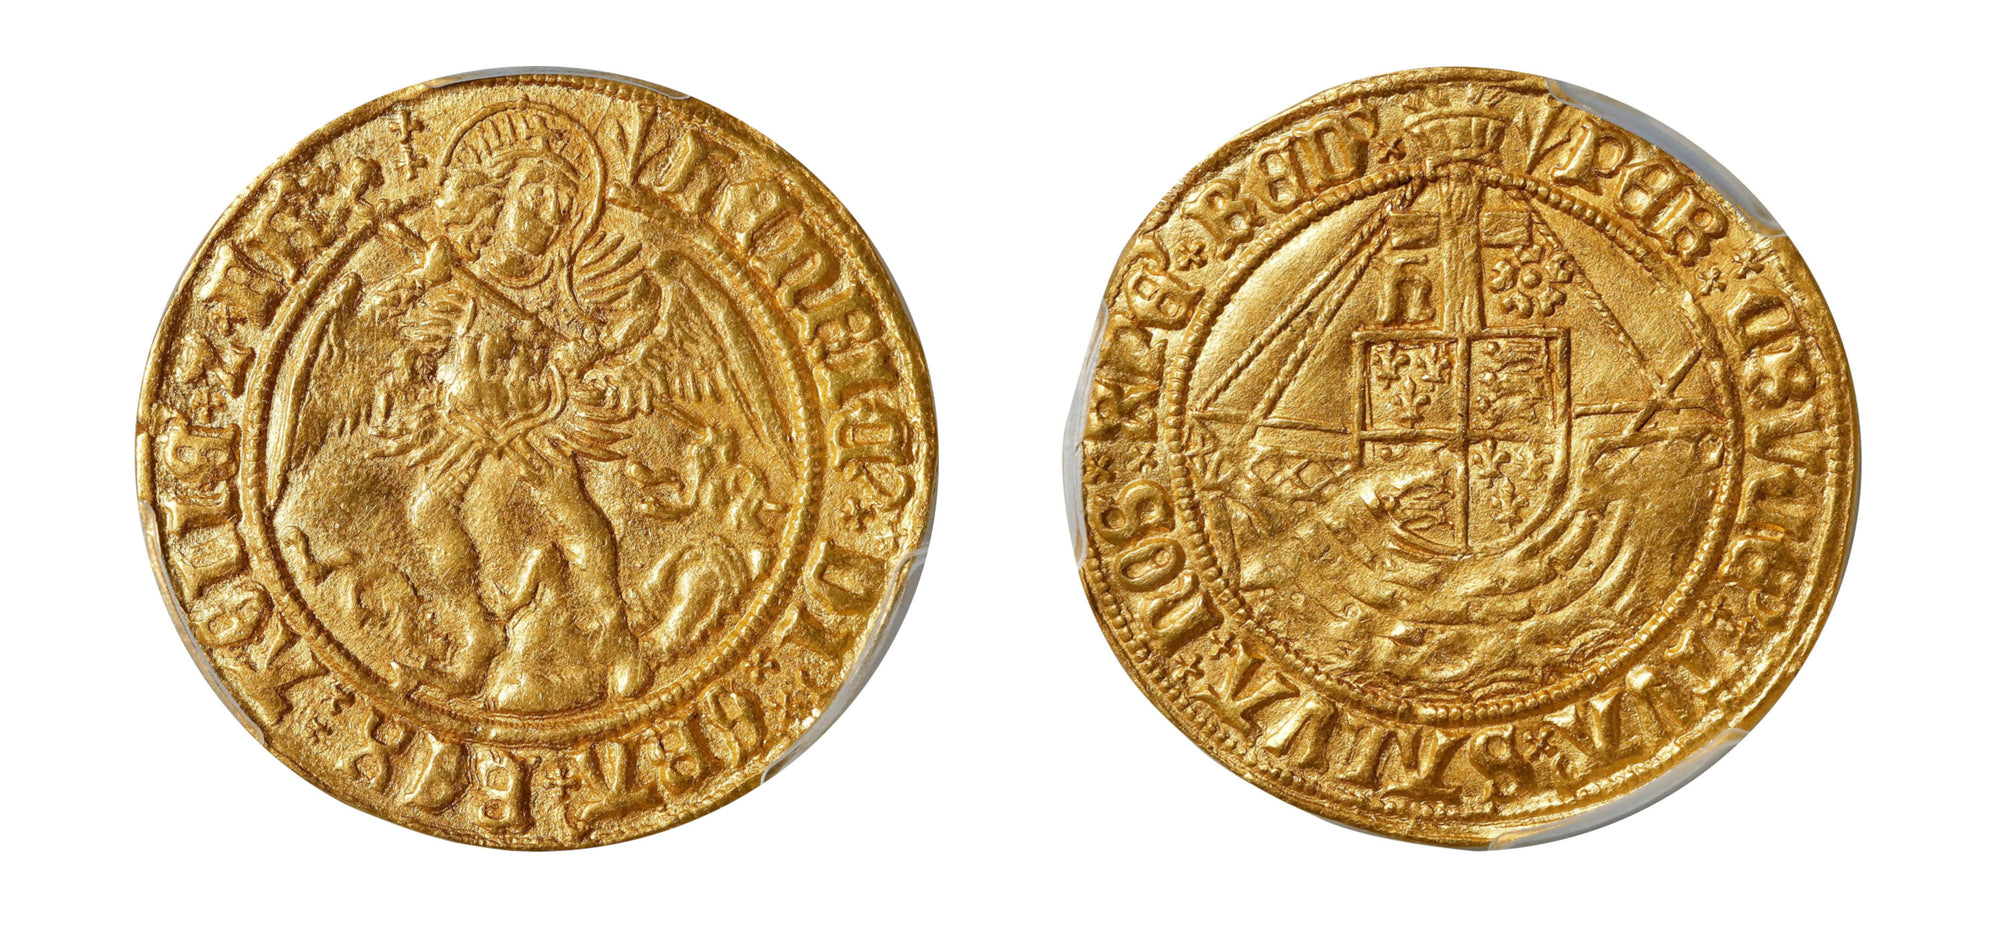 1505-1509 King Henry VII Gold Angel PCGS MS62 - Hard Asset Management, Inc